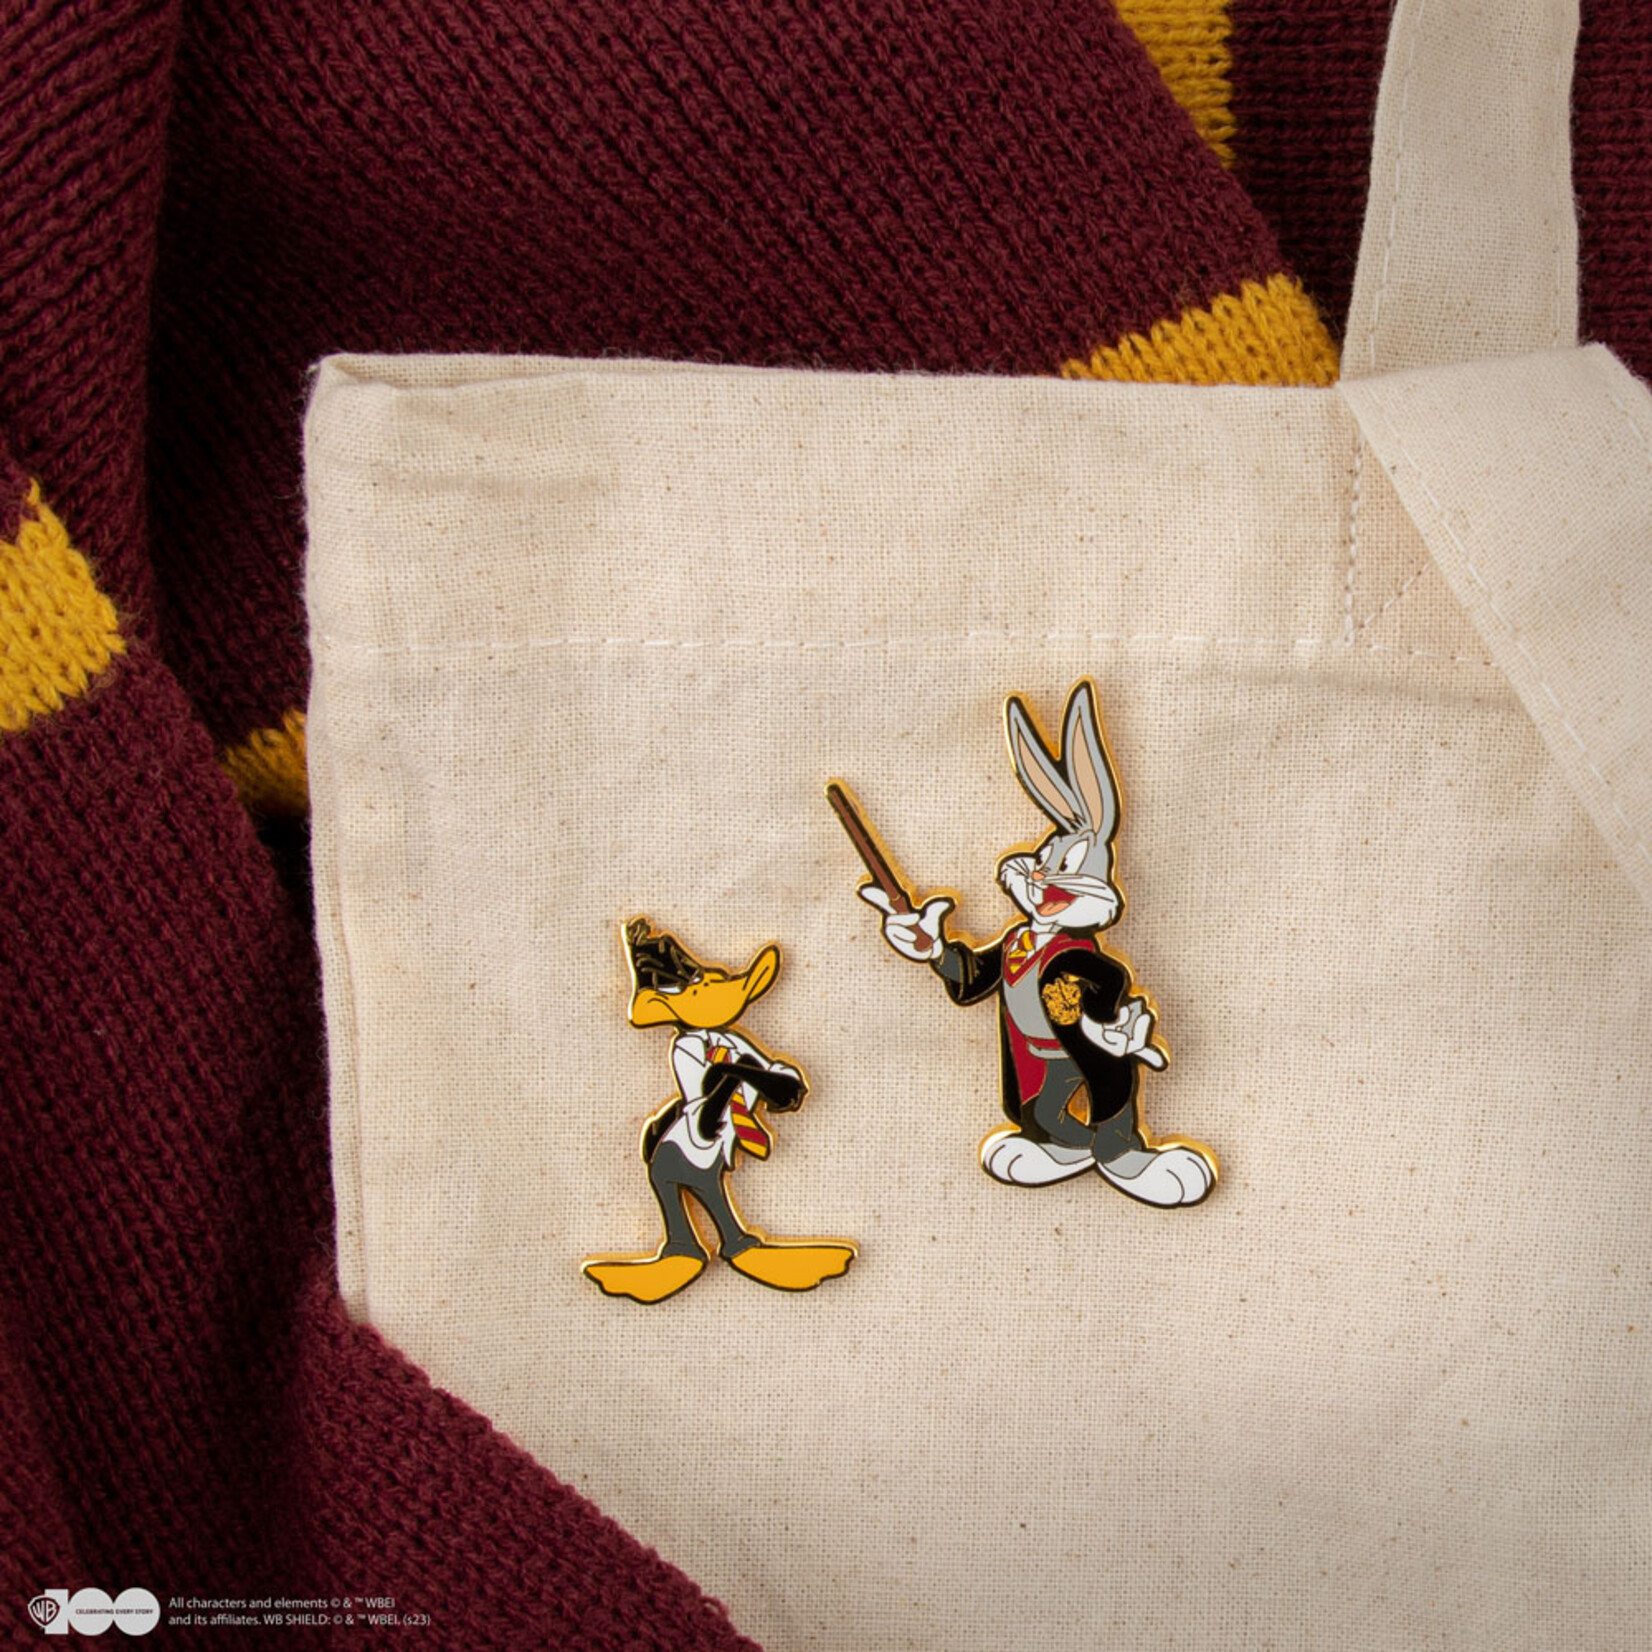 Cinereplicas Cinereplicas Looney Tunes Pins 2-Pack Bugs Bunny & Daffy Duck at Hogwarts